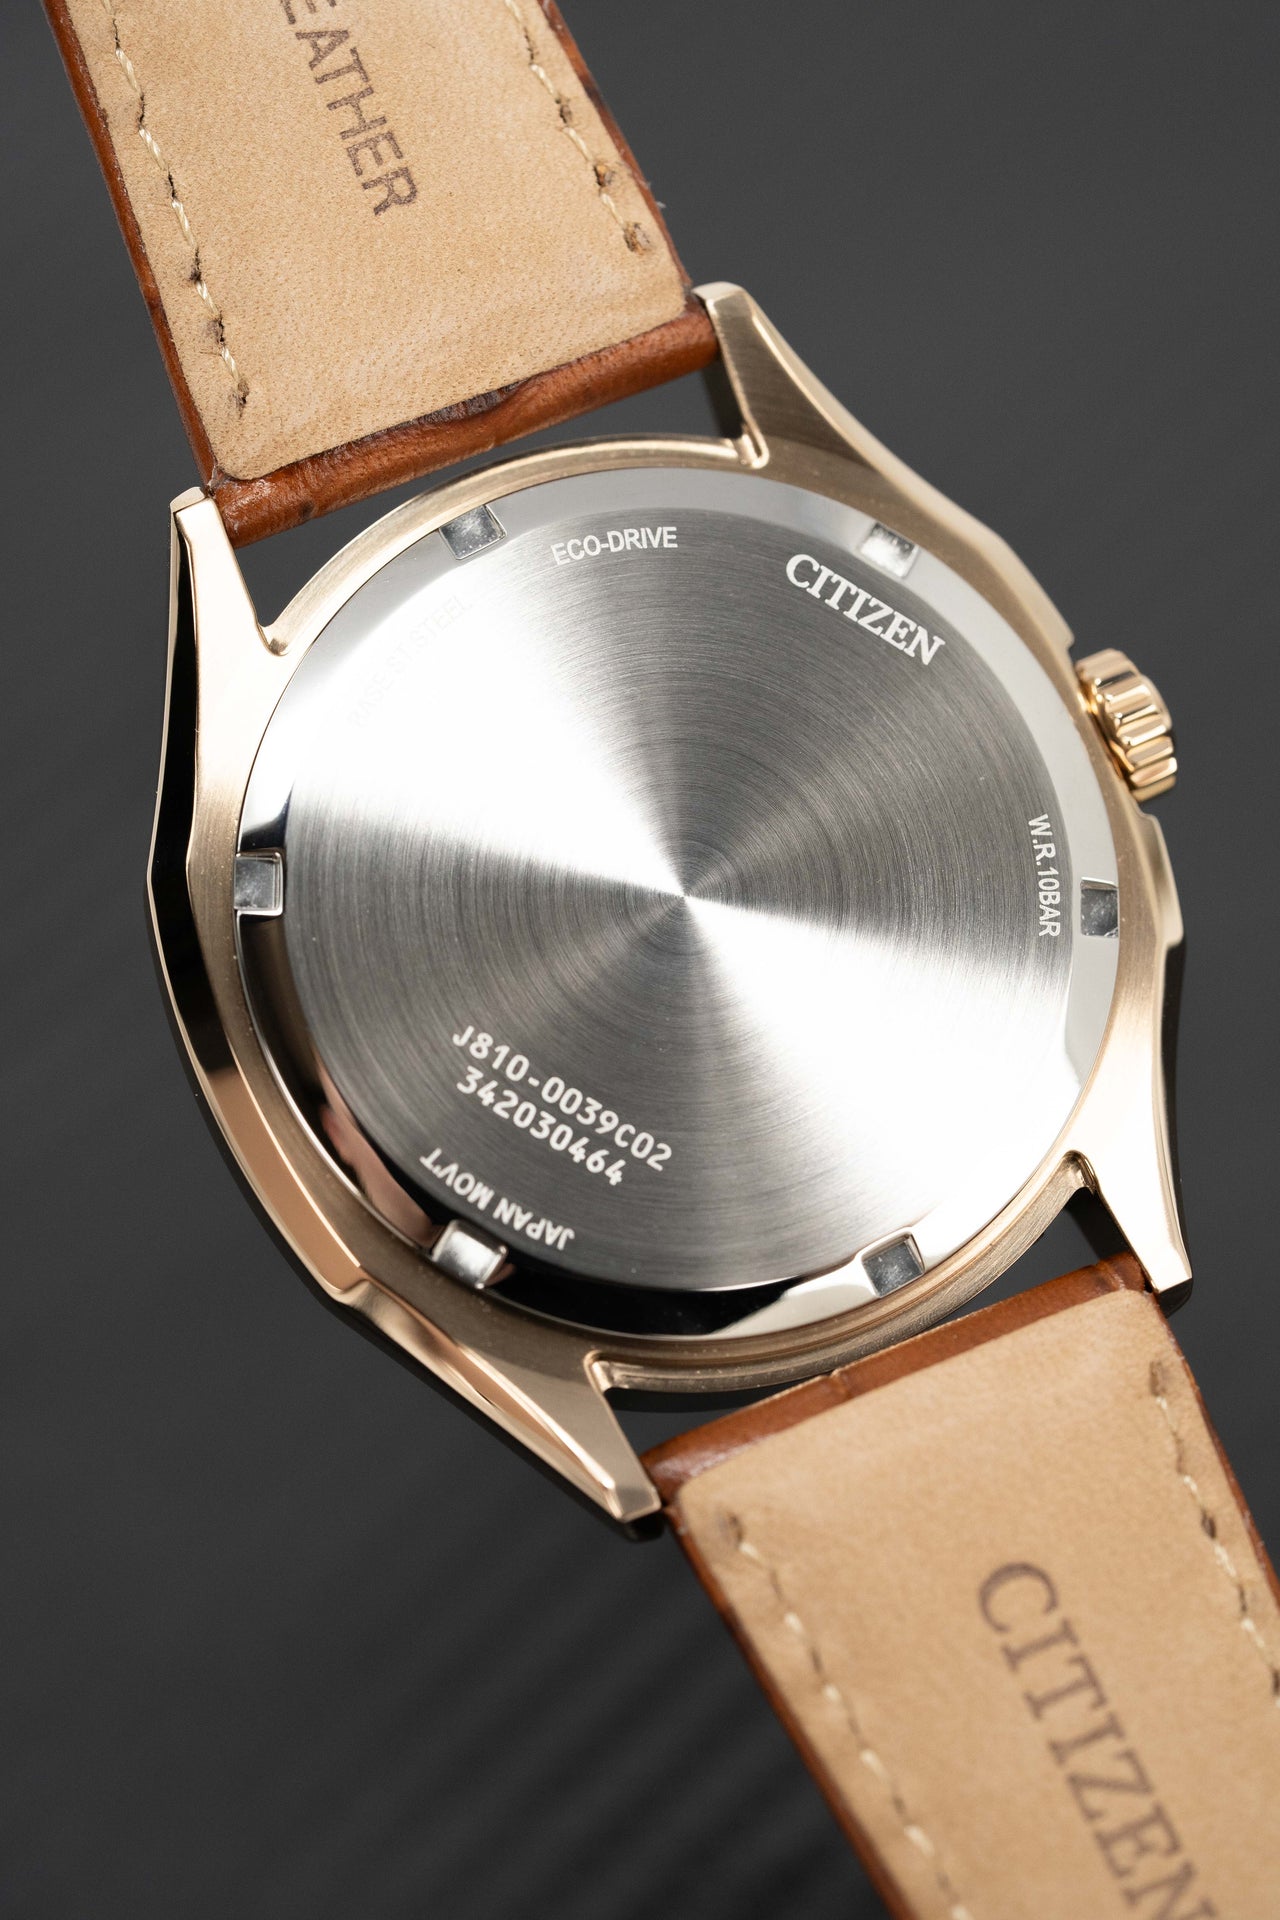 CRW4100013 - Drive de Cartier Flying Tourbillon watch - Large model,  hand-wound mechanical movement, rose gold, leather - Cartier